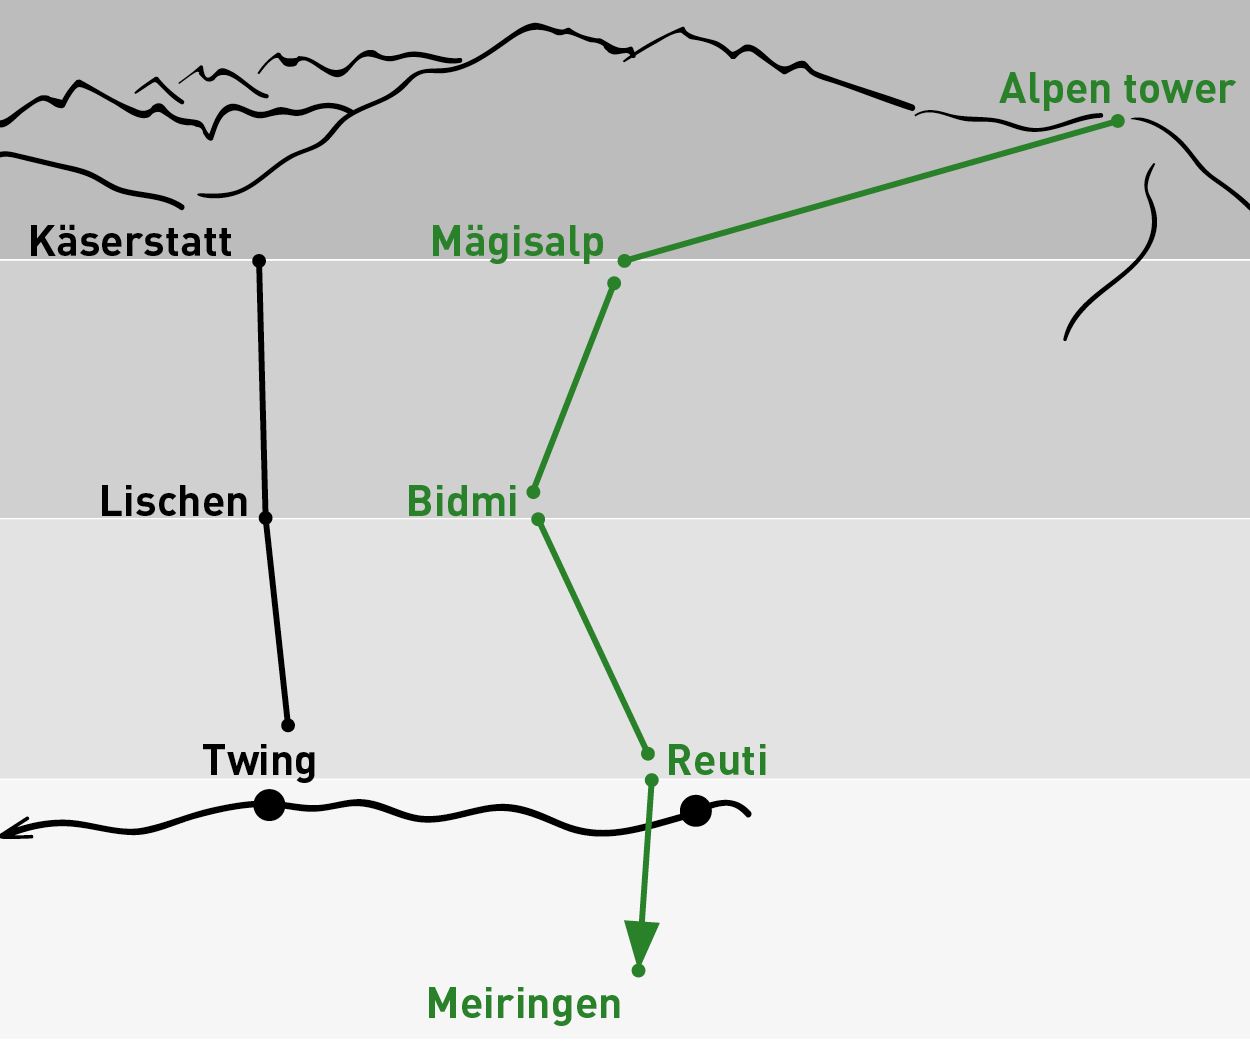 Alpen tower - Meiringen | Aller simple